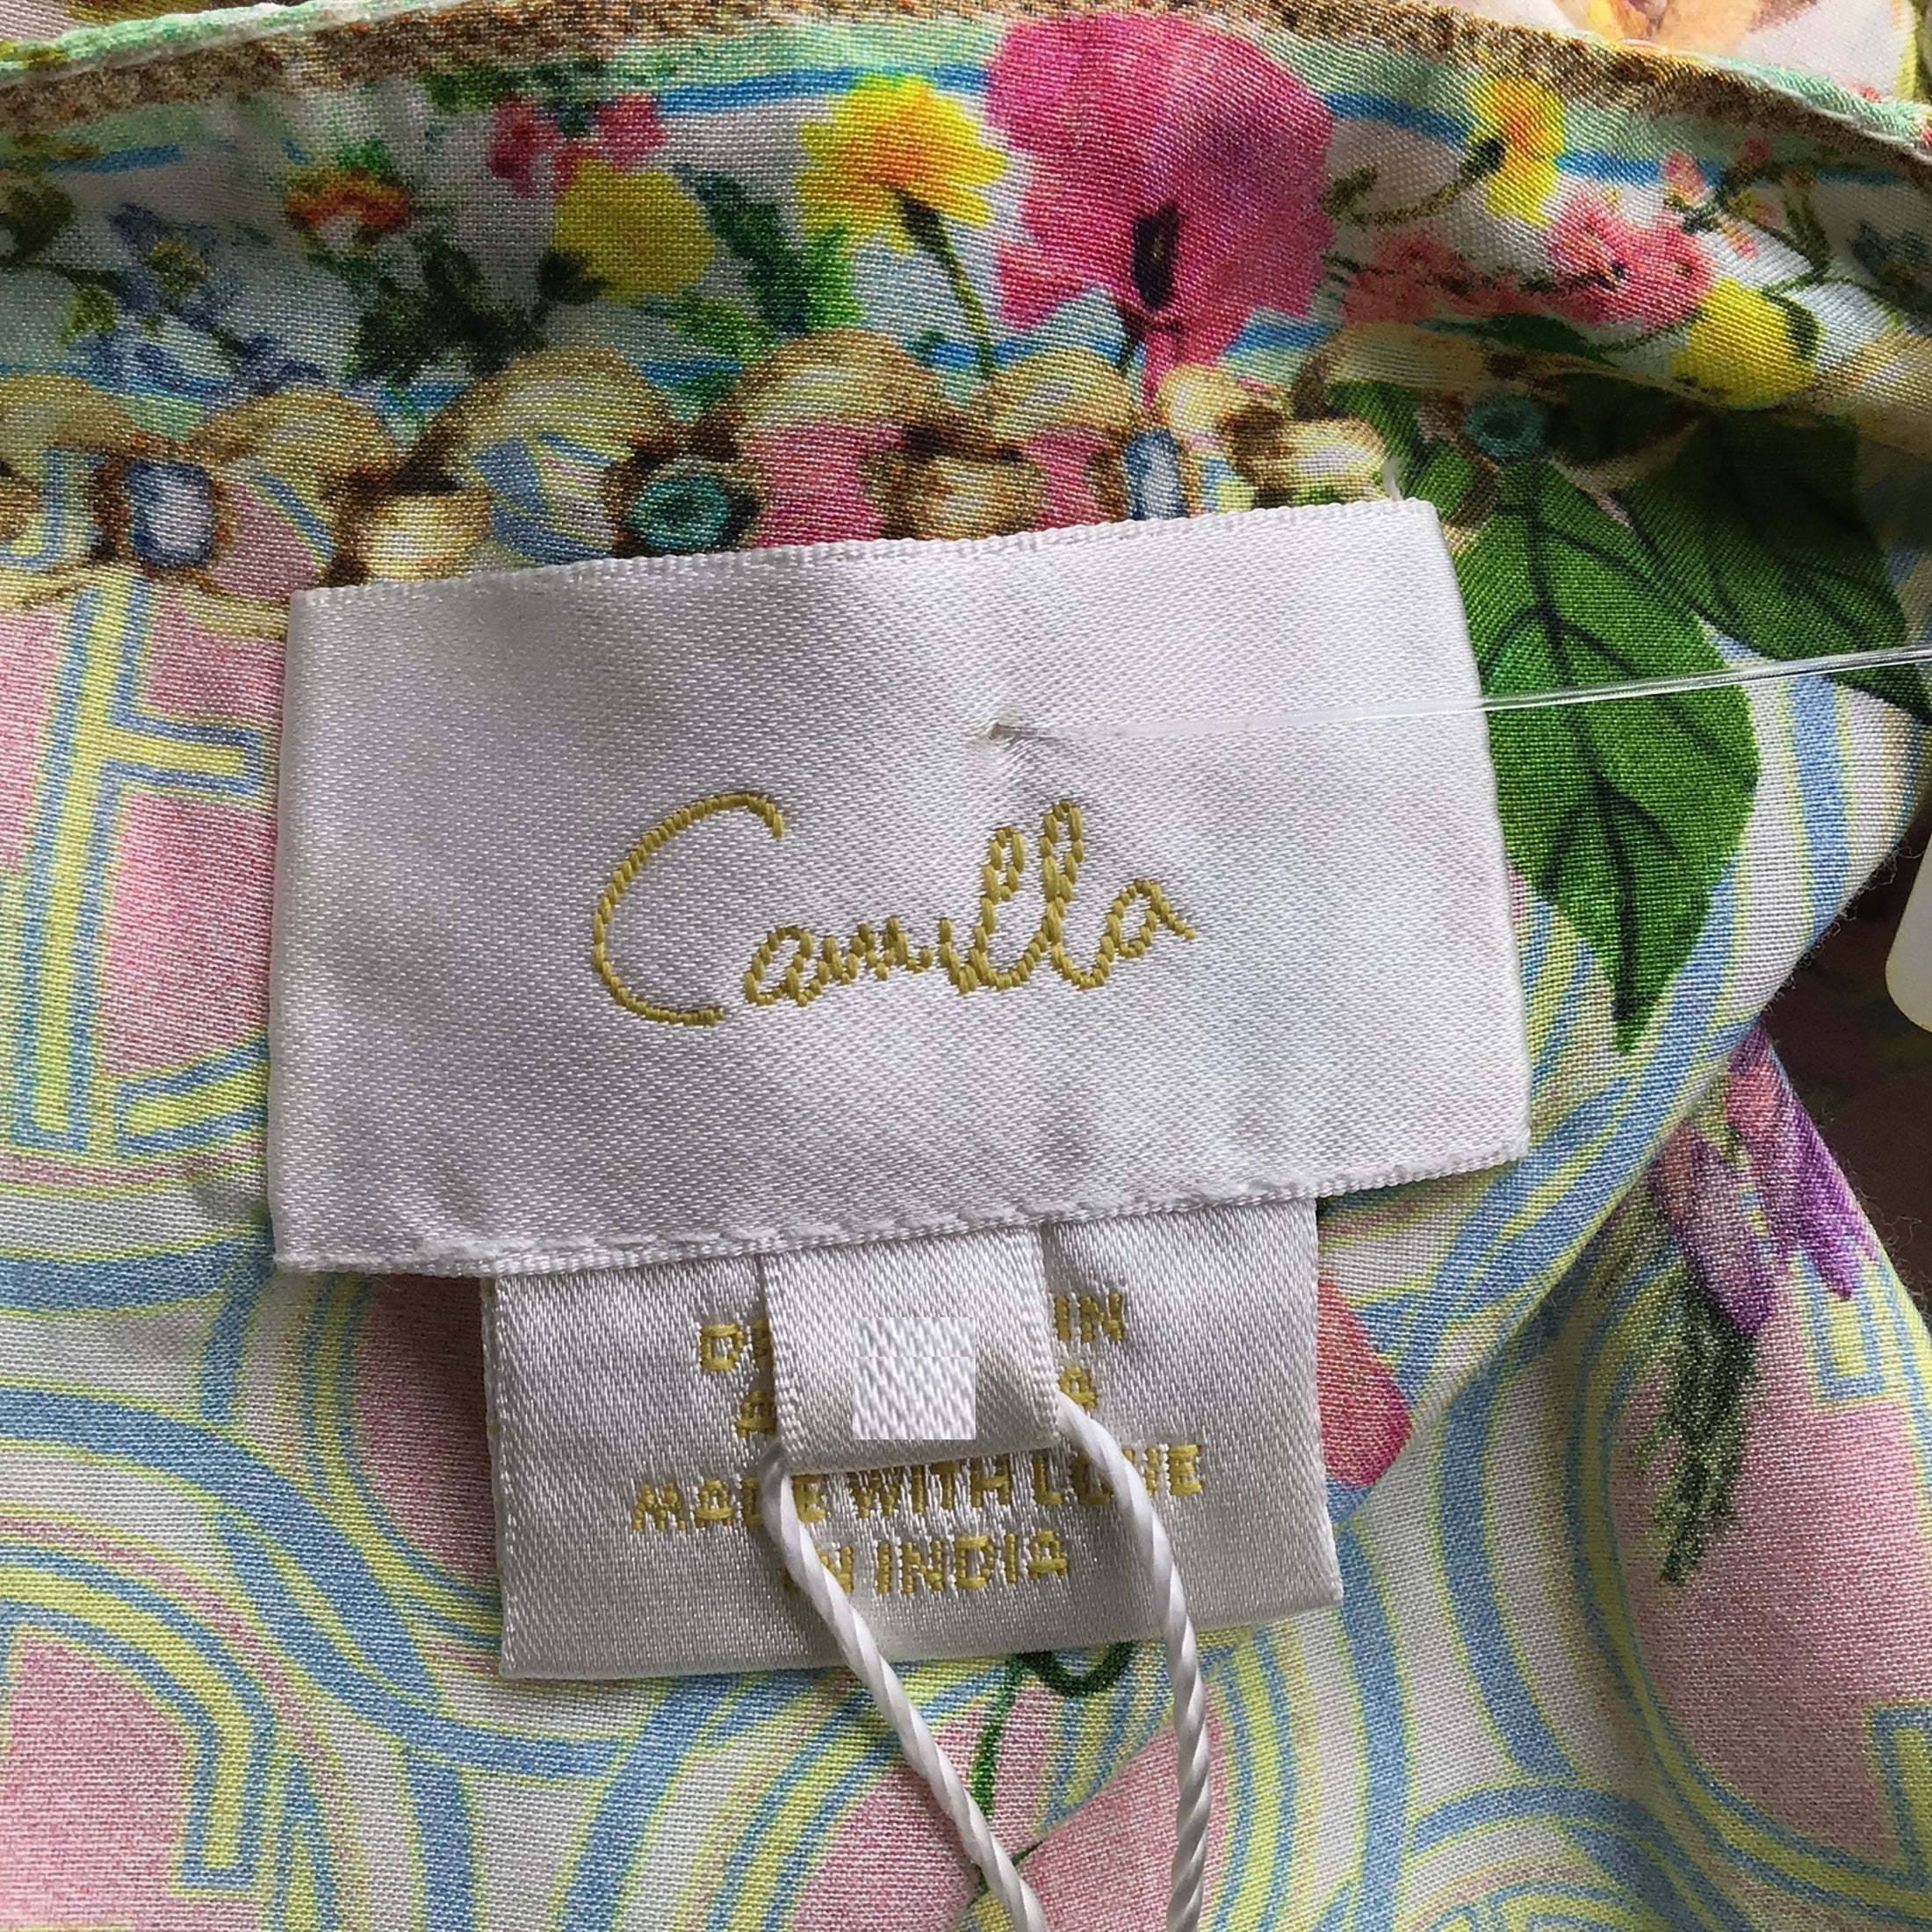 Camilla Multicolored Sunlight Symphony Blouson Flared Dress